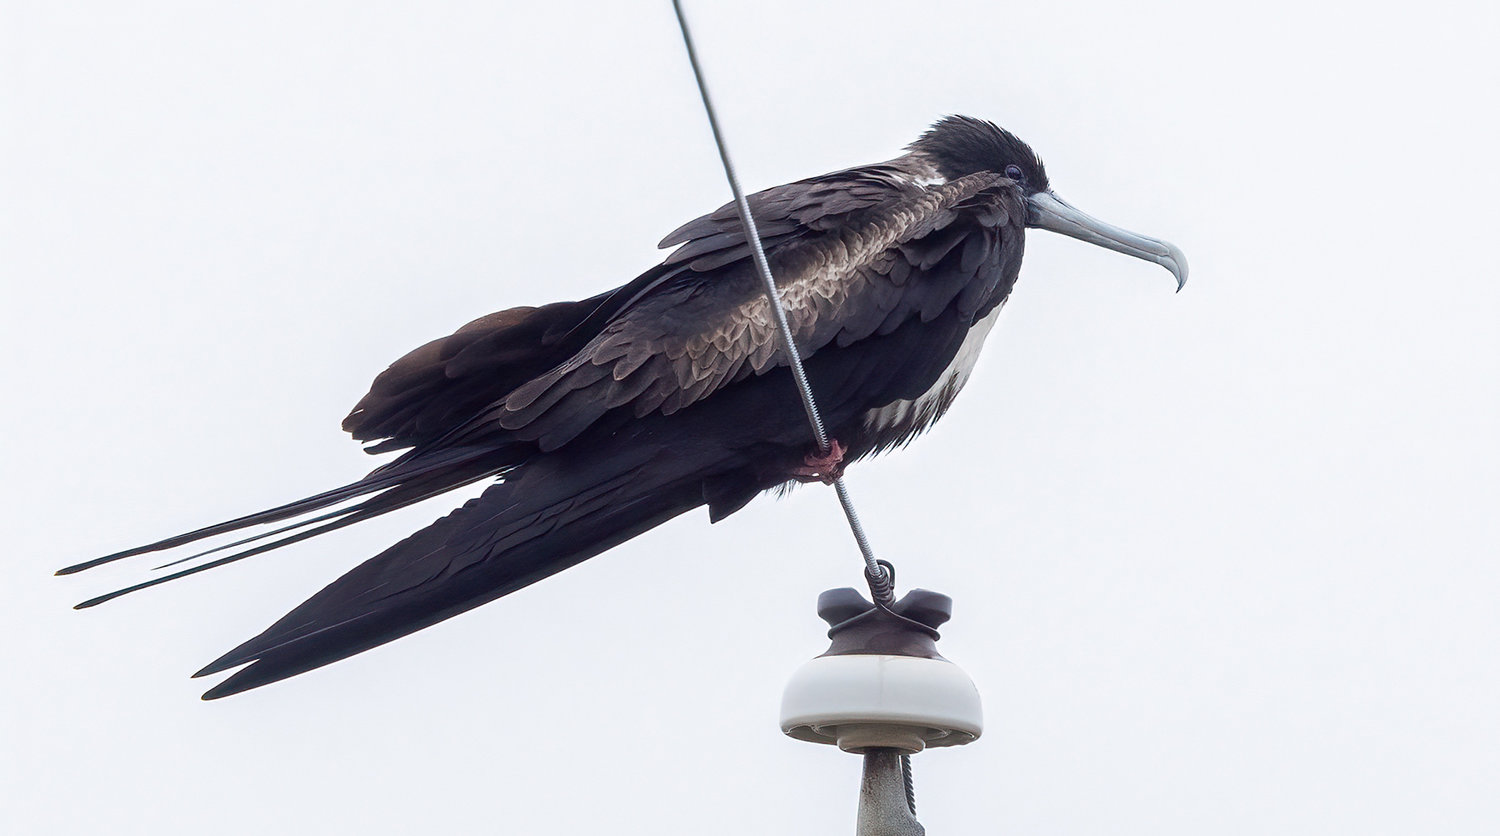 This Magnificent Frigatebird was a shocker of a wire bird on Baxter Road in Sconset last week.